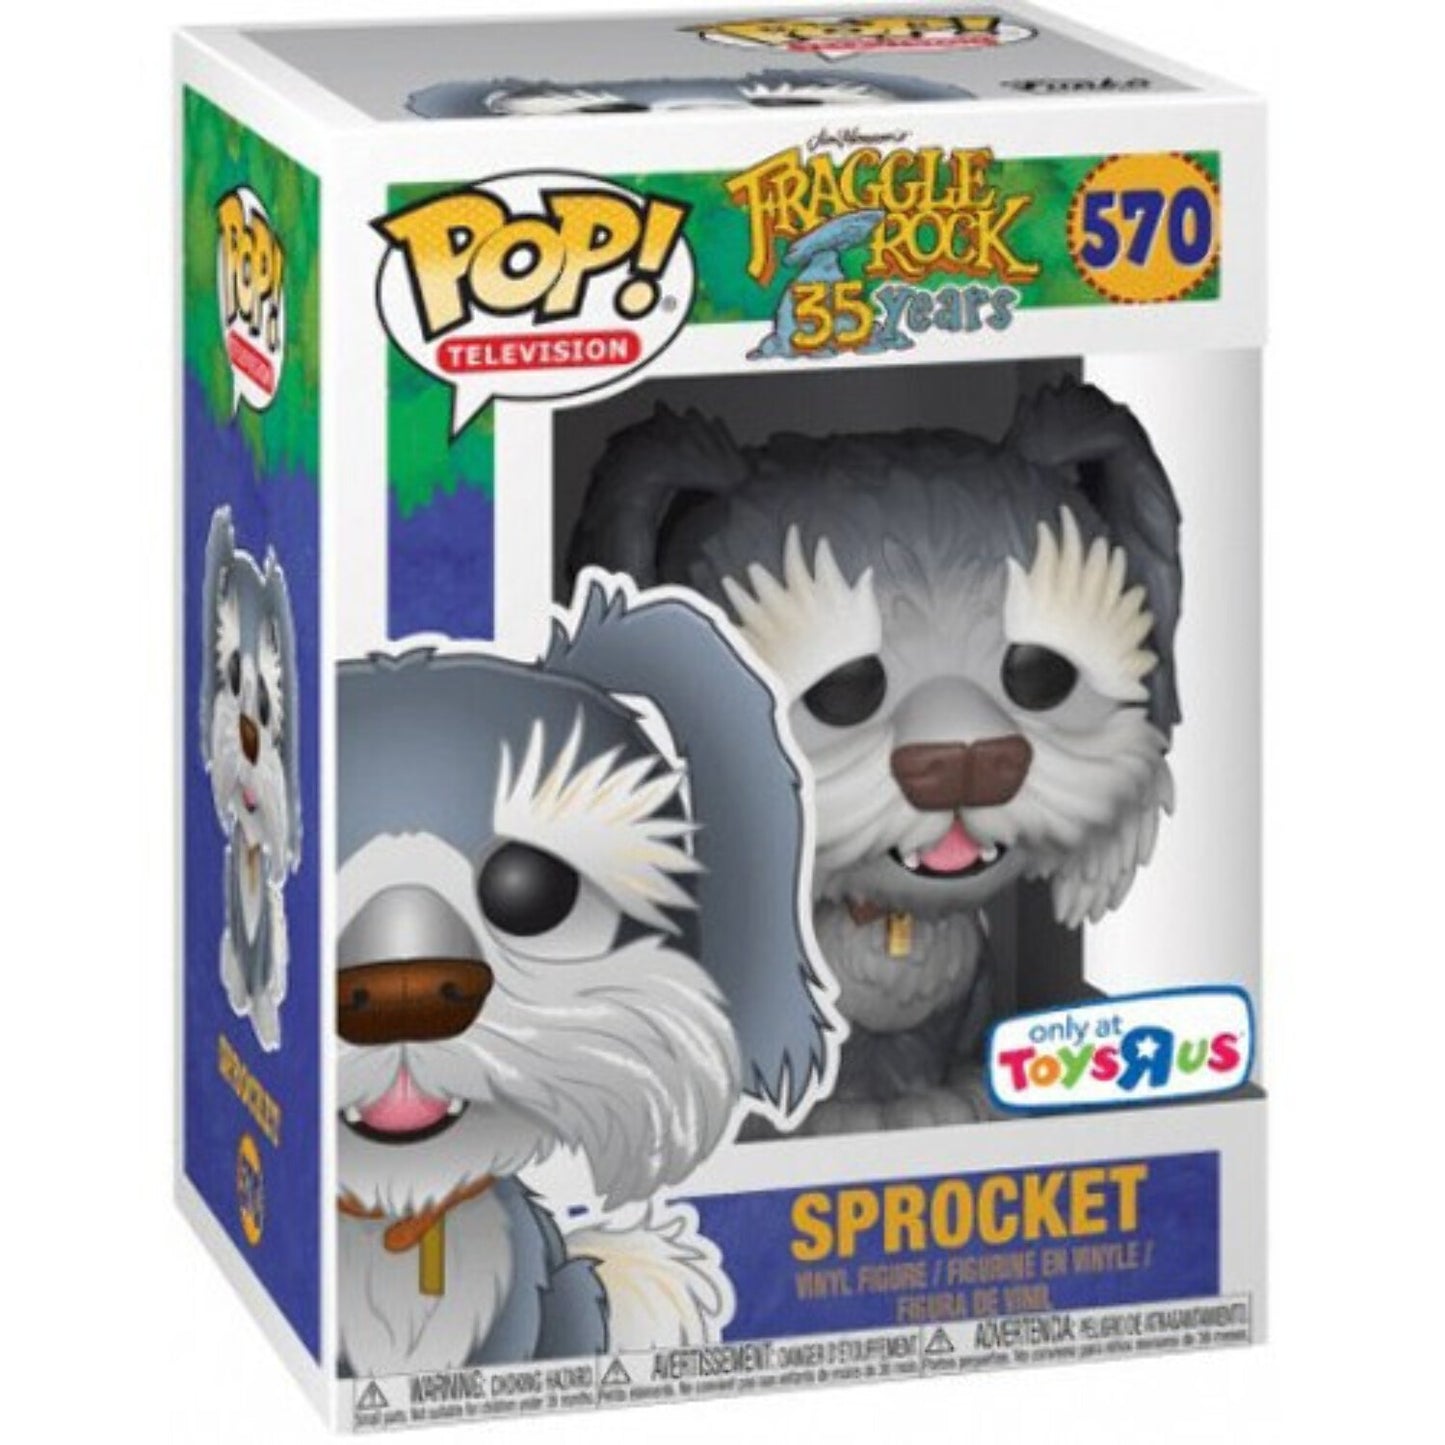 Funko Pop! Fraggle Rock - Sprocket Toys R' Us Exclusive #570